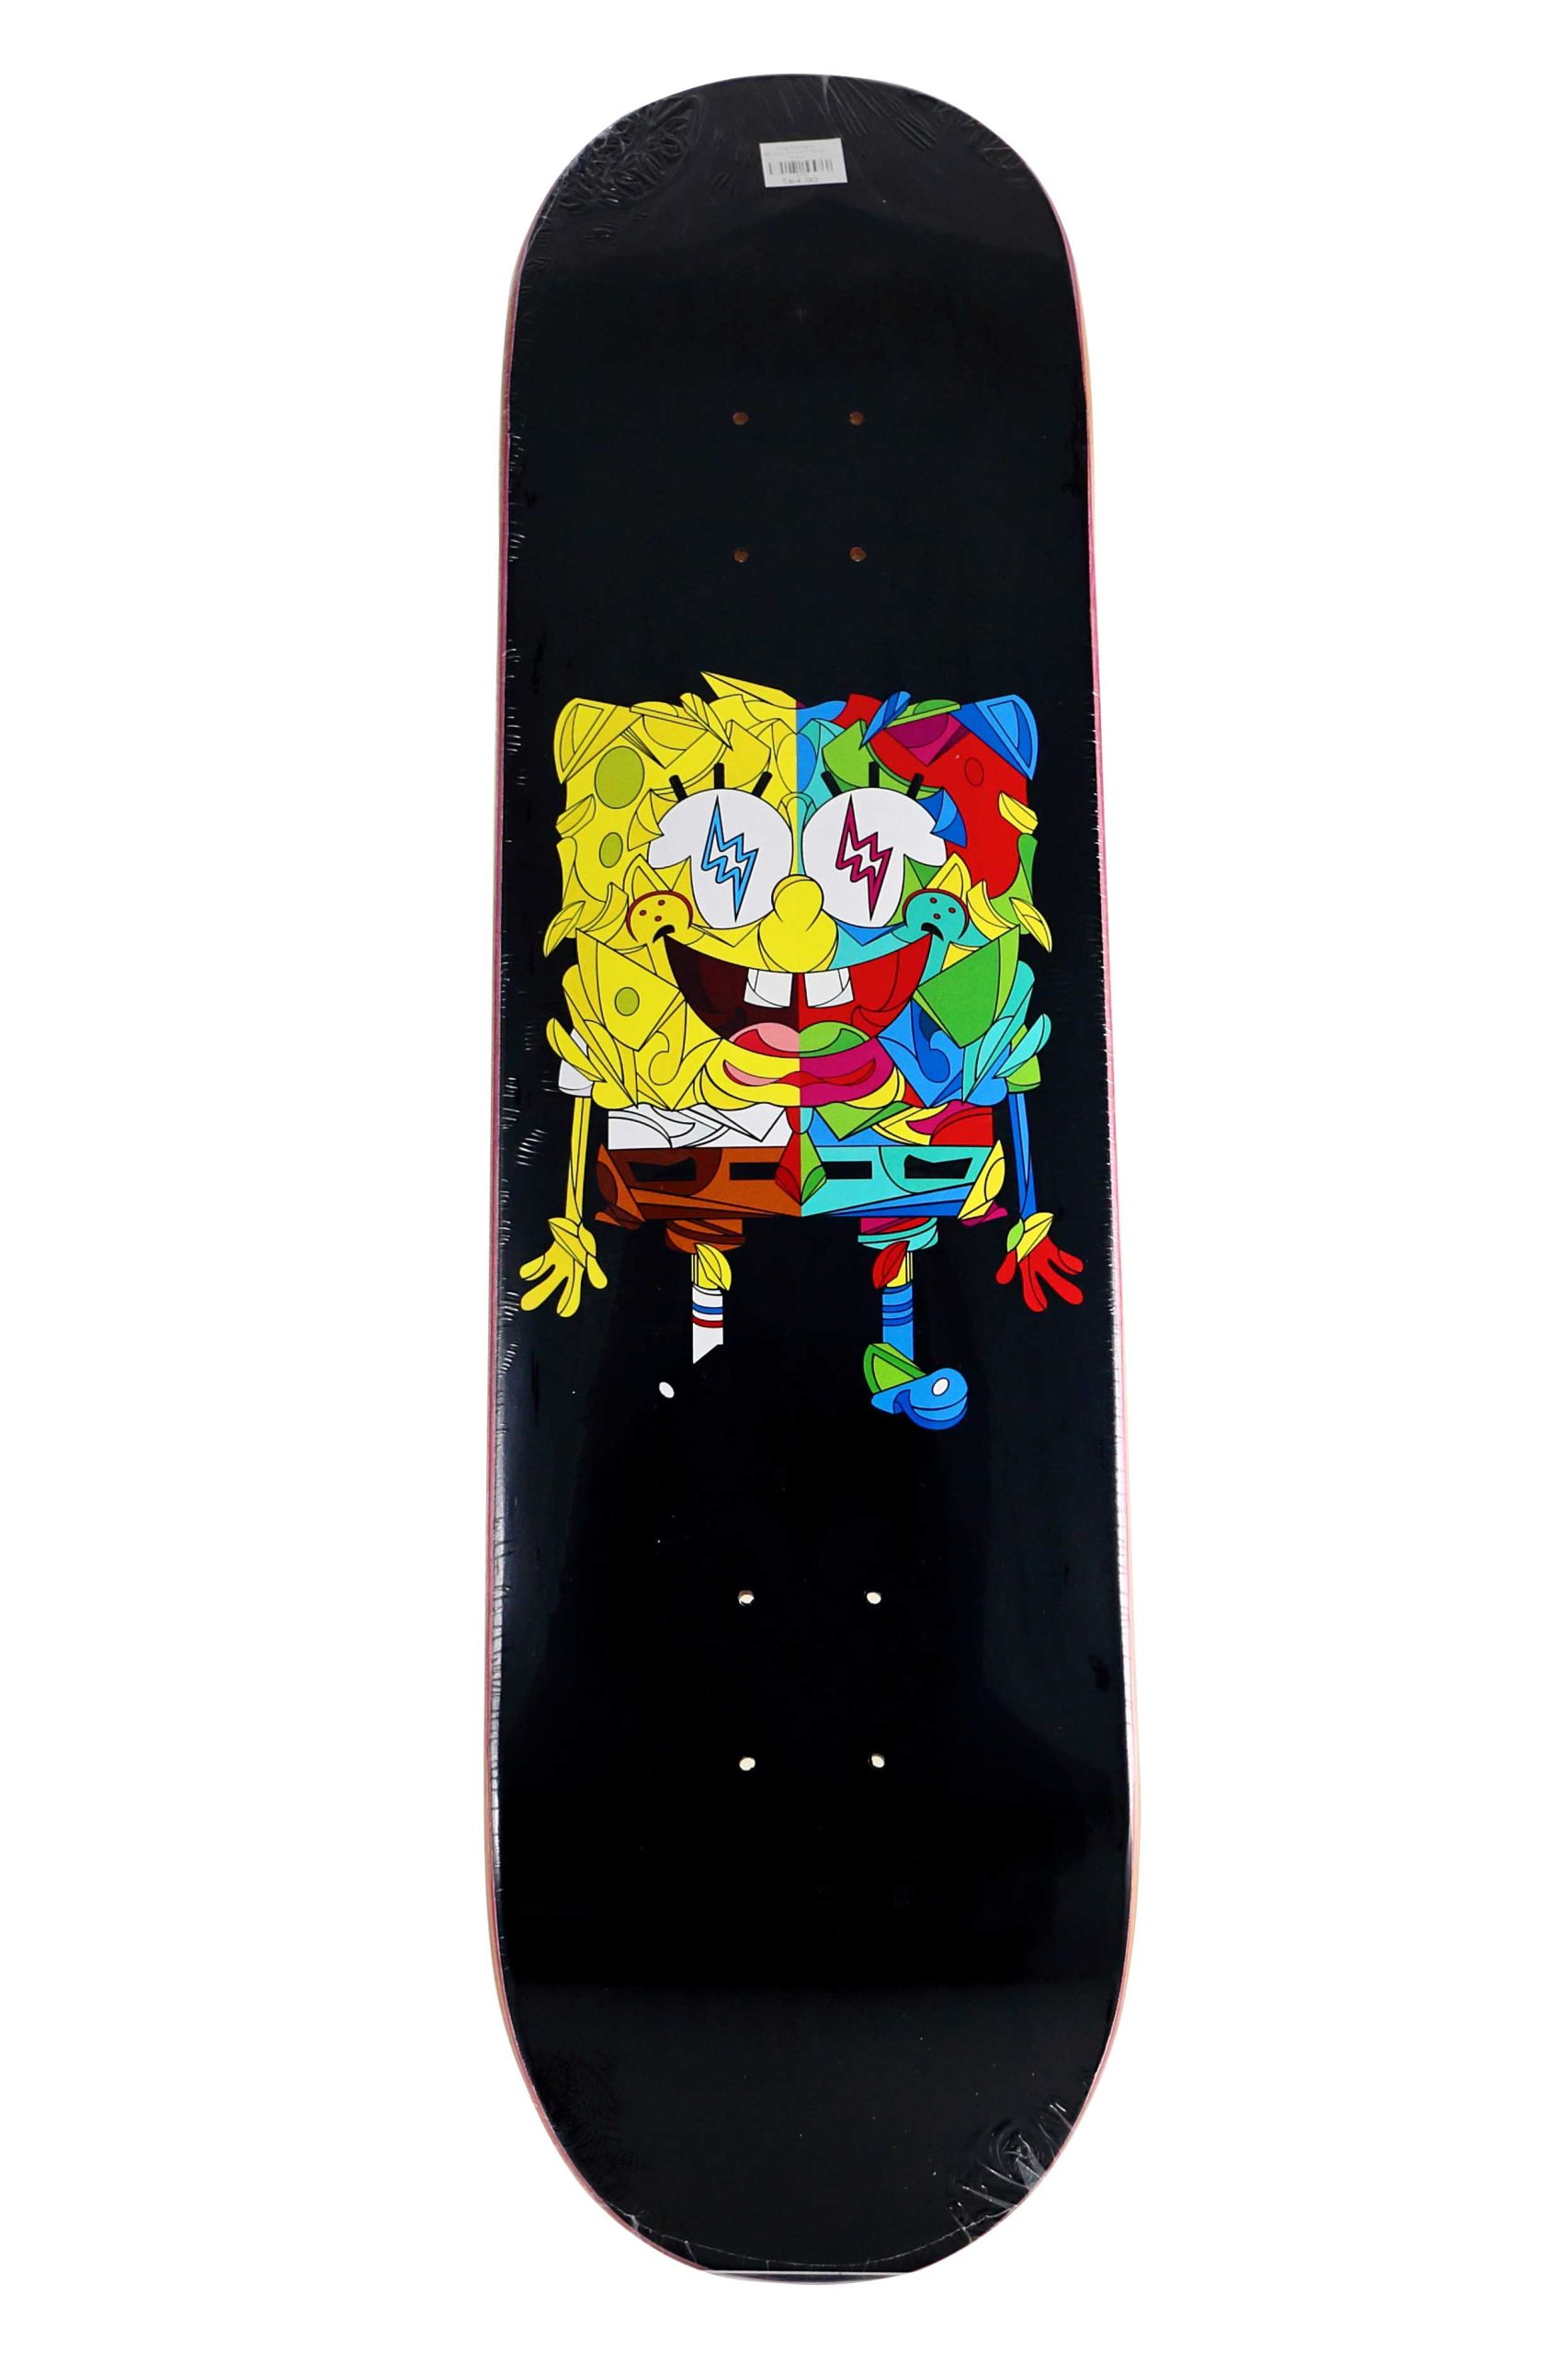 J Balvin x Louis De Guzman Spongebob Black Skateboard Deck -artistskateboard.com